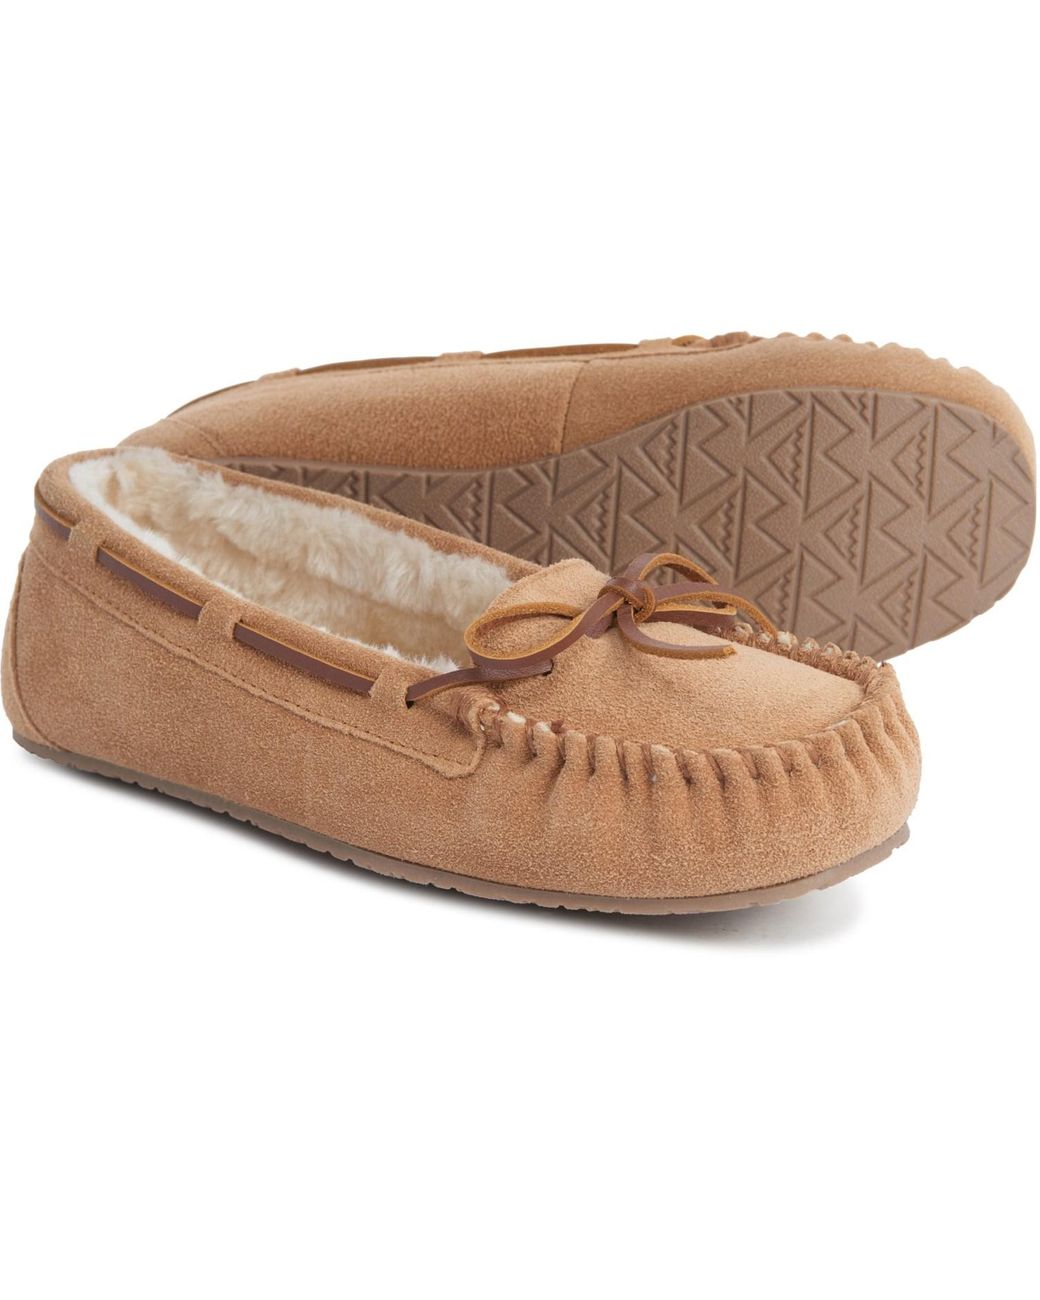 pavers comfort sandals